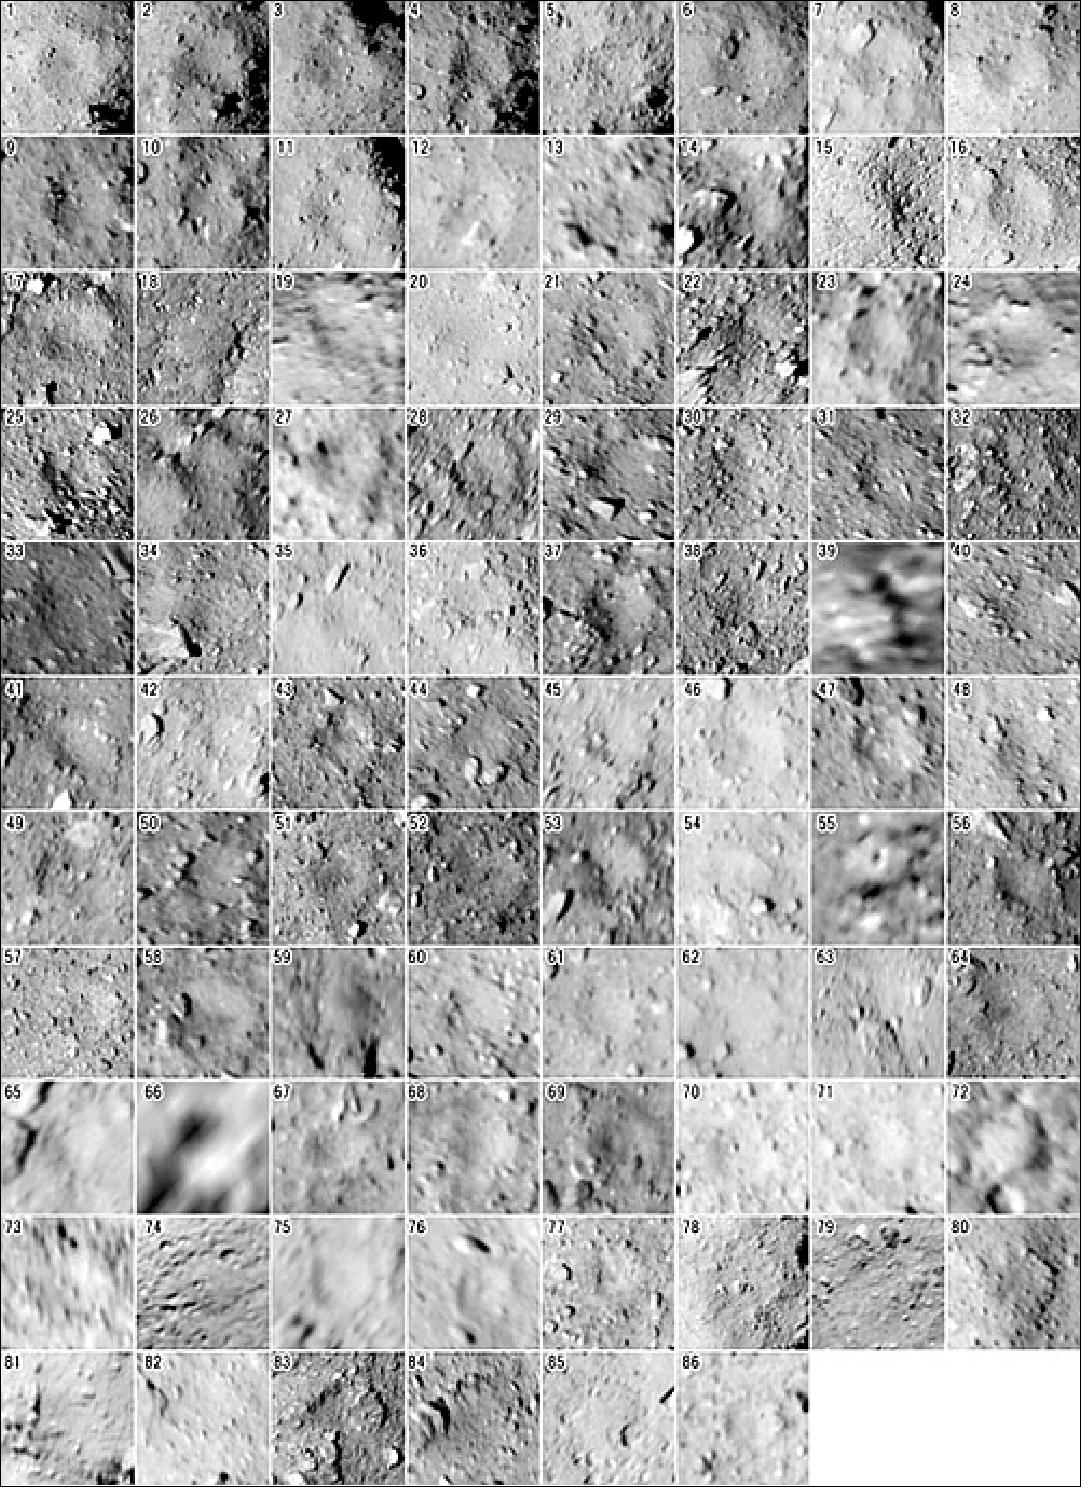 Figure 31: Individual images of each identified crater on Ryugu (image credit: Kobe University)